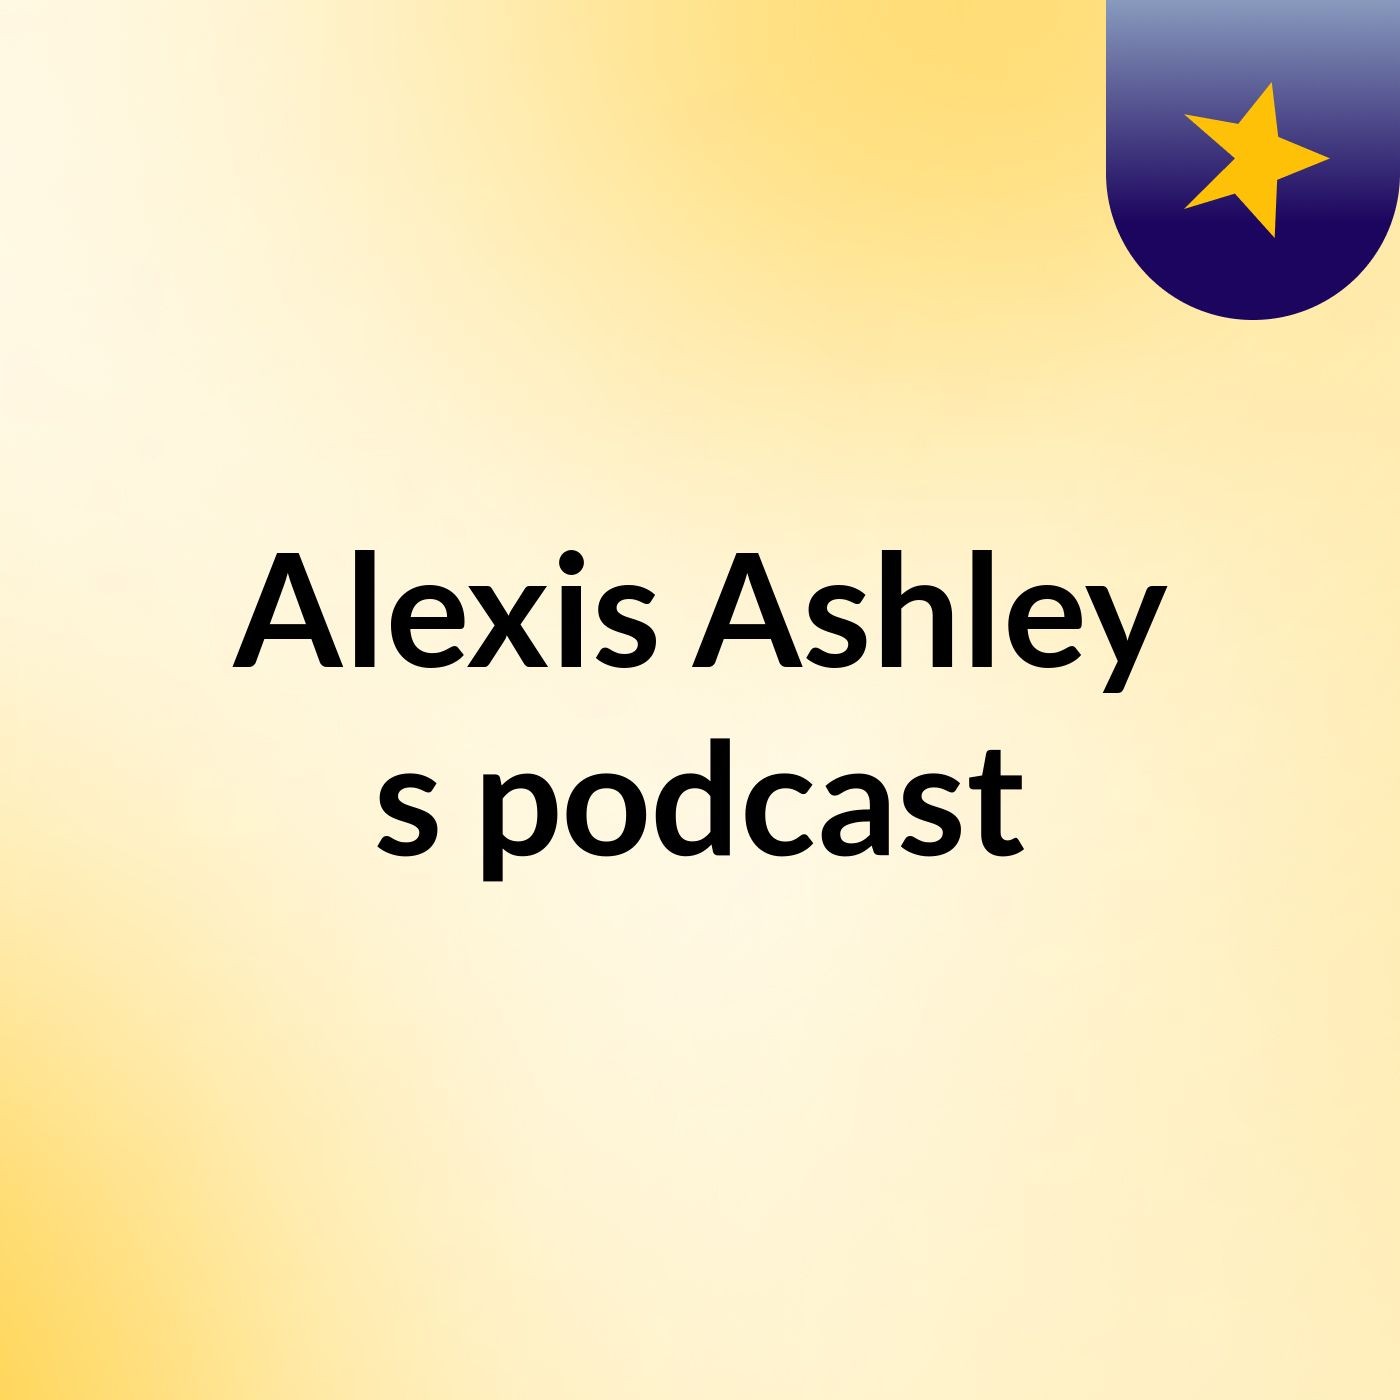 Alexis Ashley's podcast